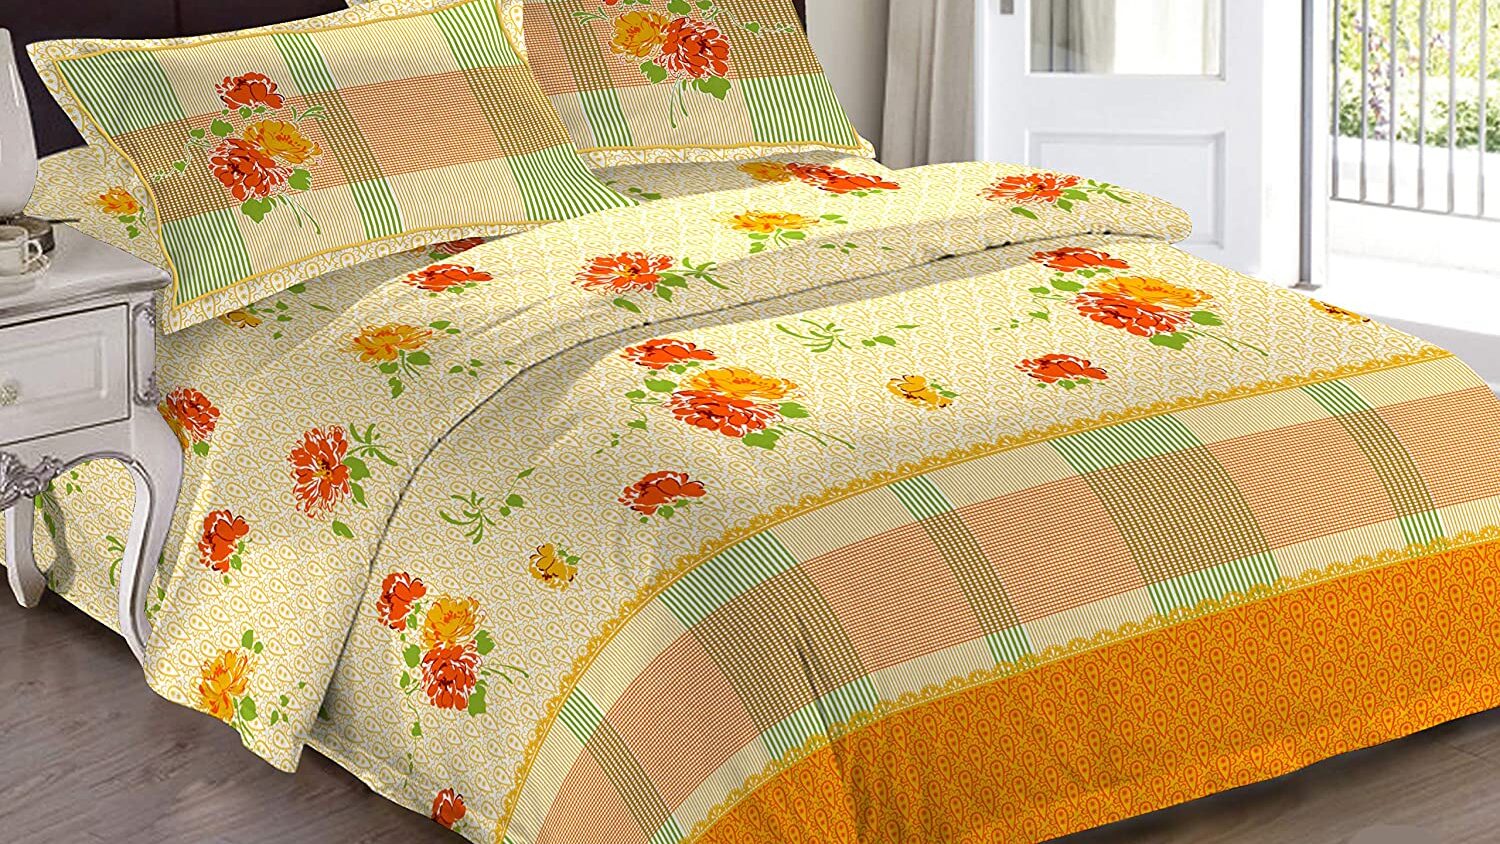 Top 15 Best Bed Sheet Brands in India